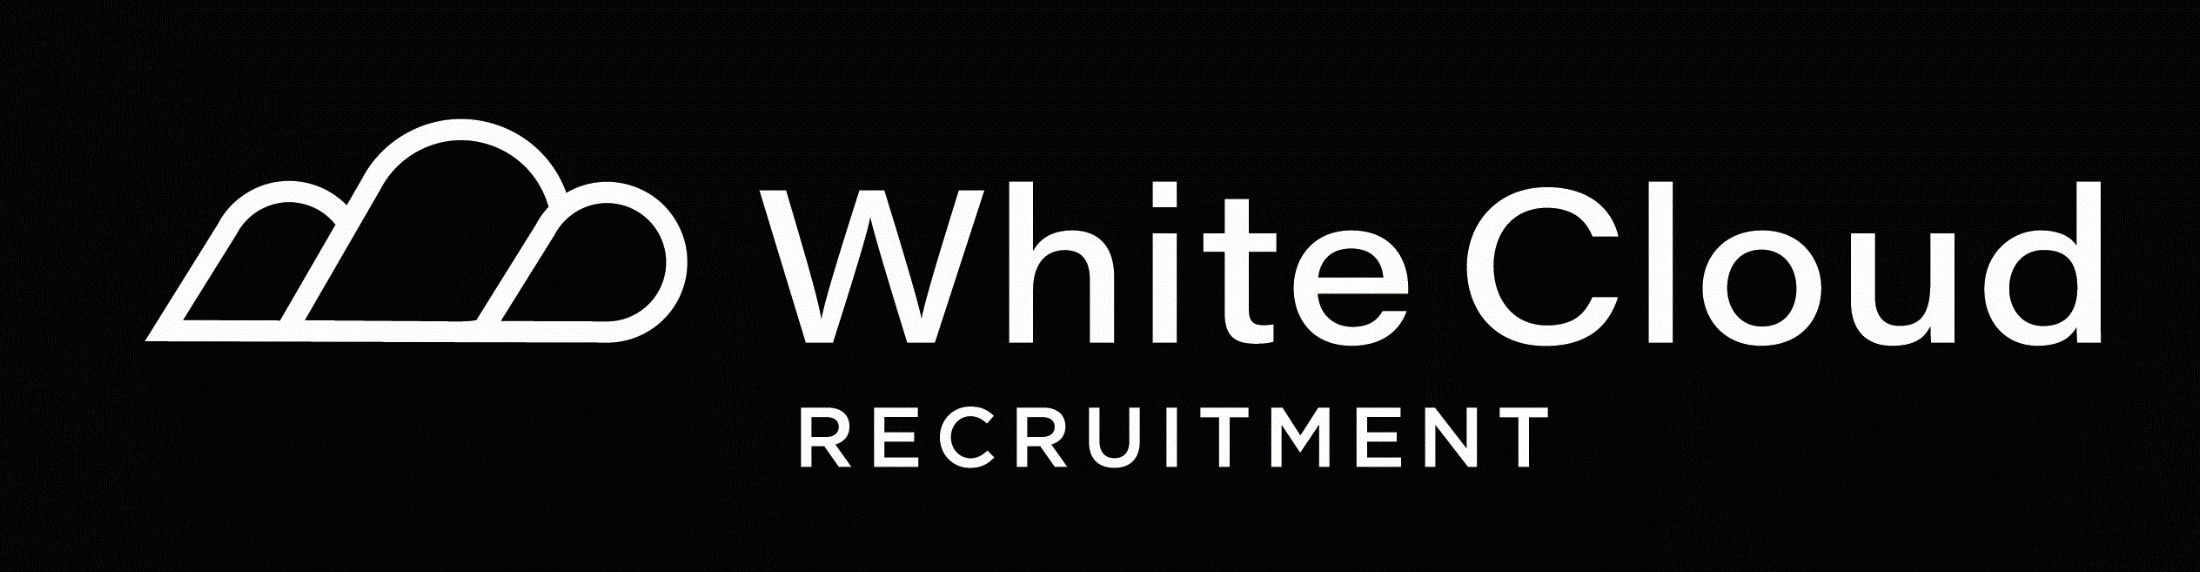 White Cloud Recruitment banner